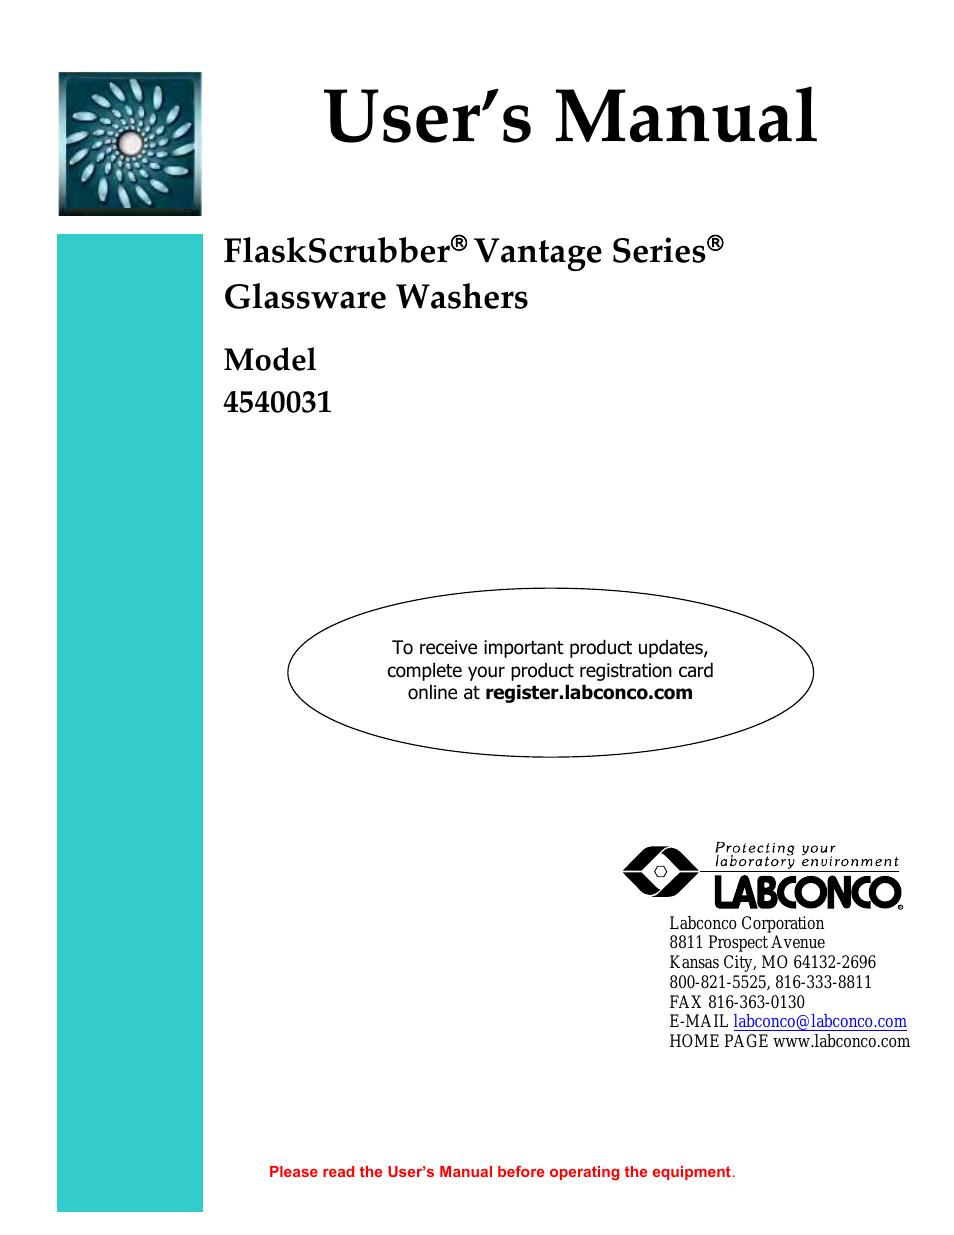 FlaskScrubber Vantage Series Glassware Washers 4540031